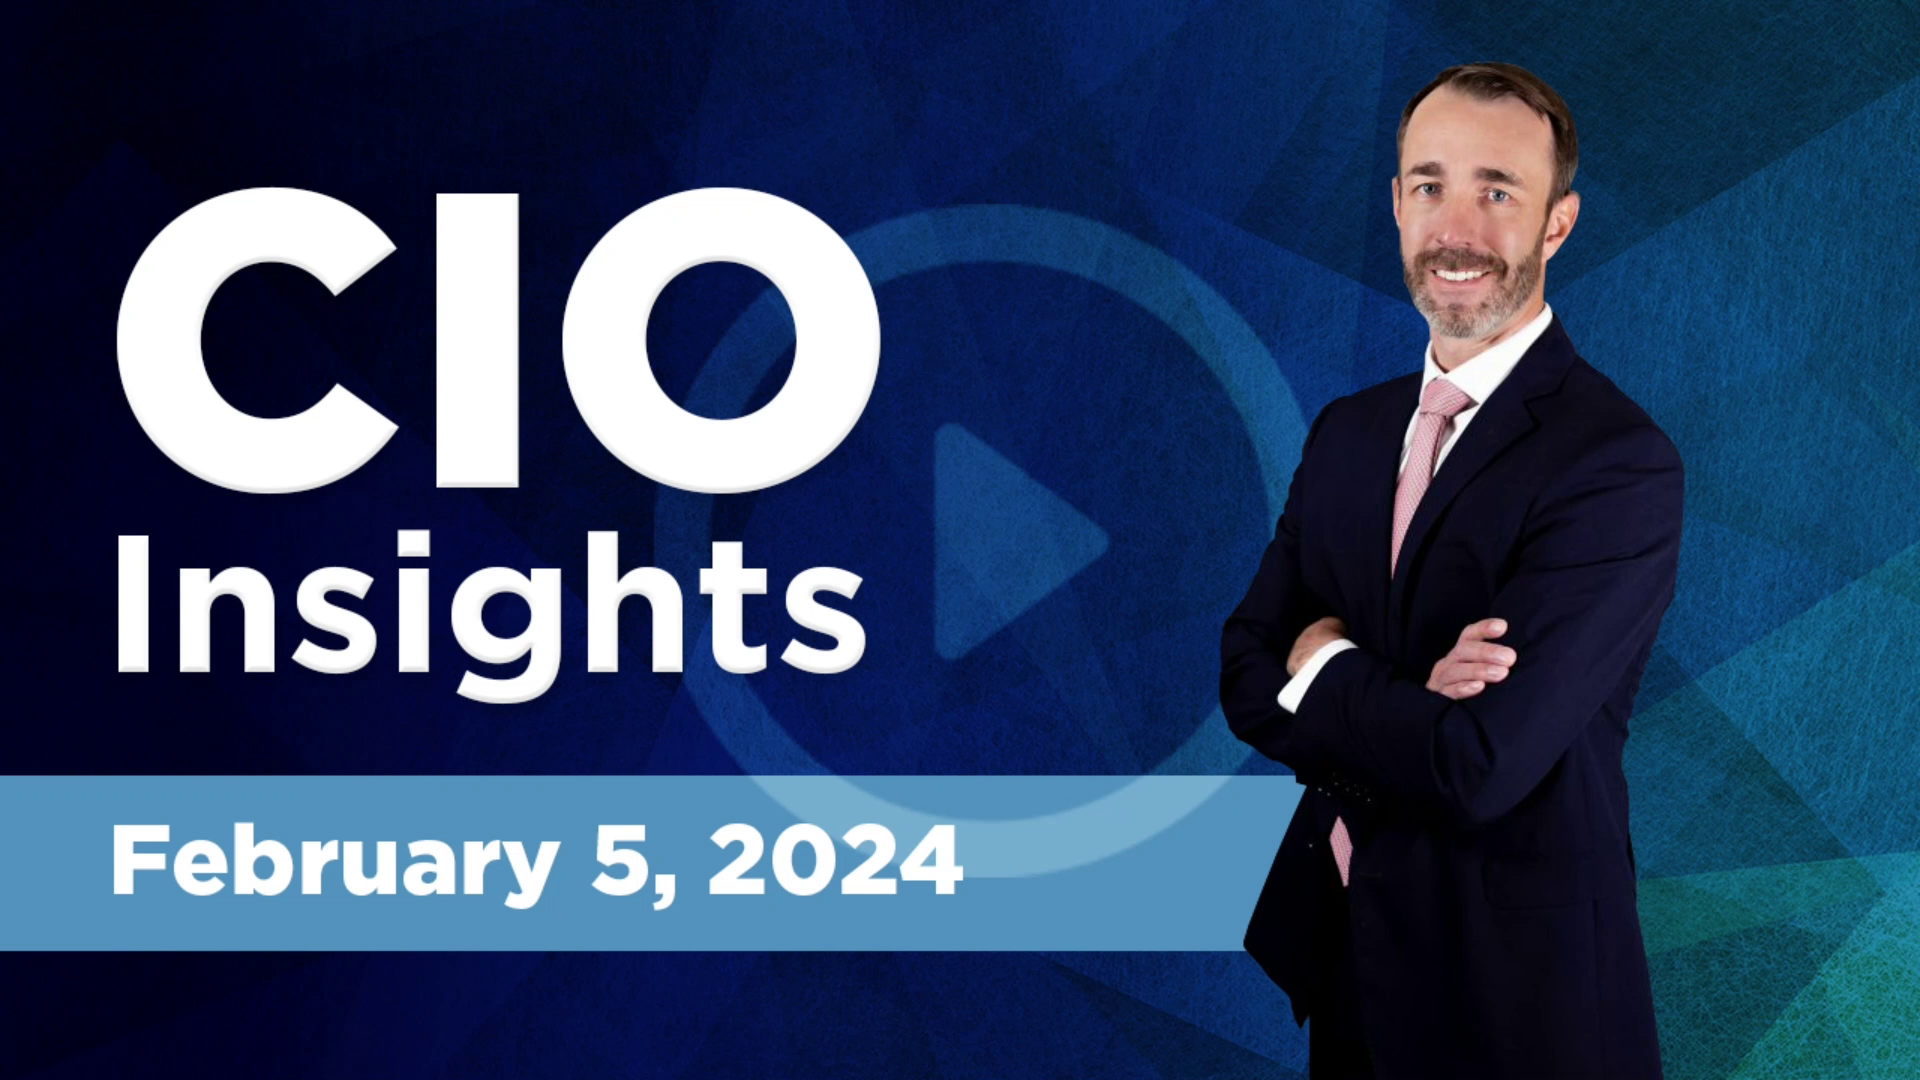 CIO Insights February 5, 2024